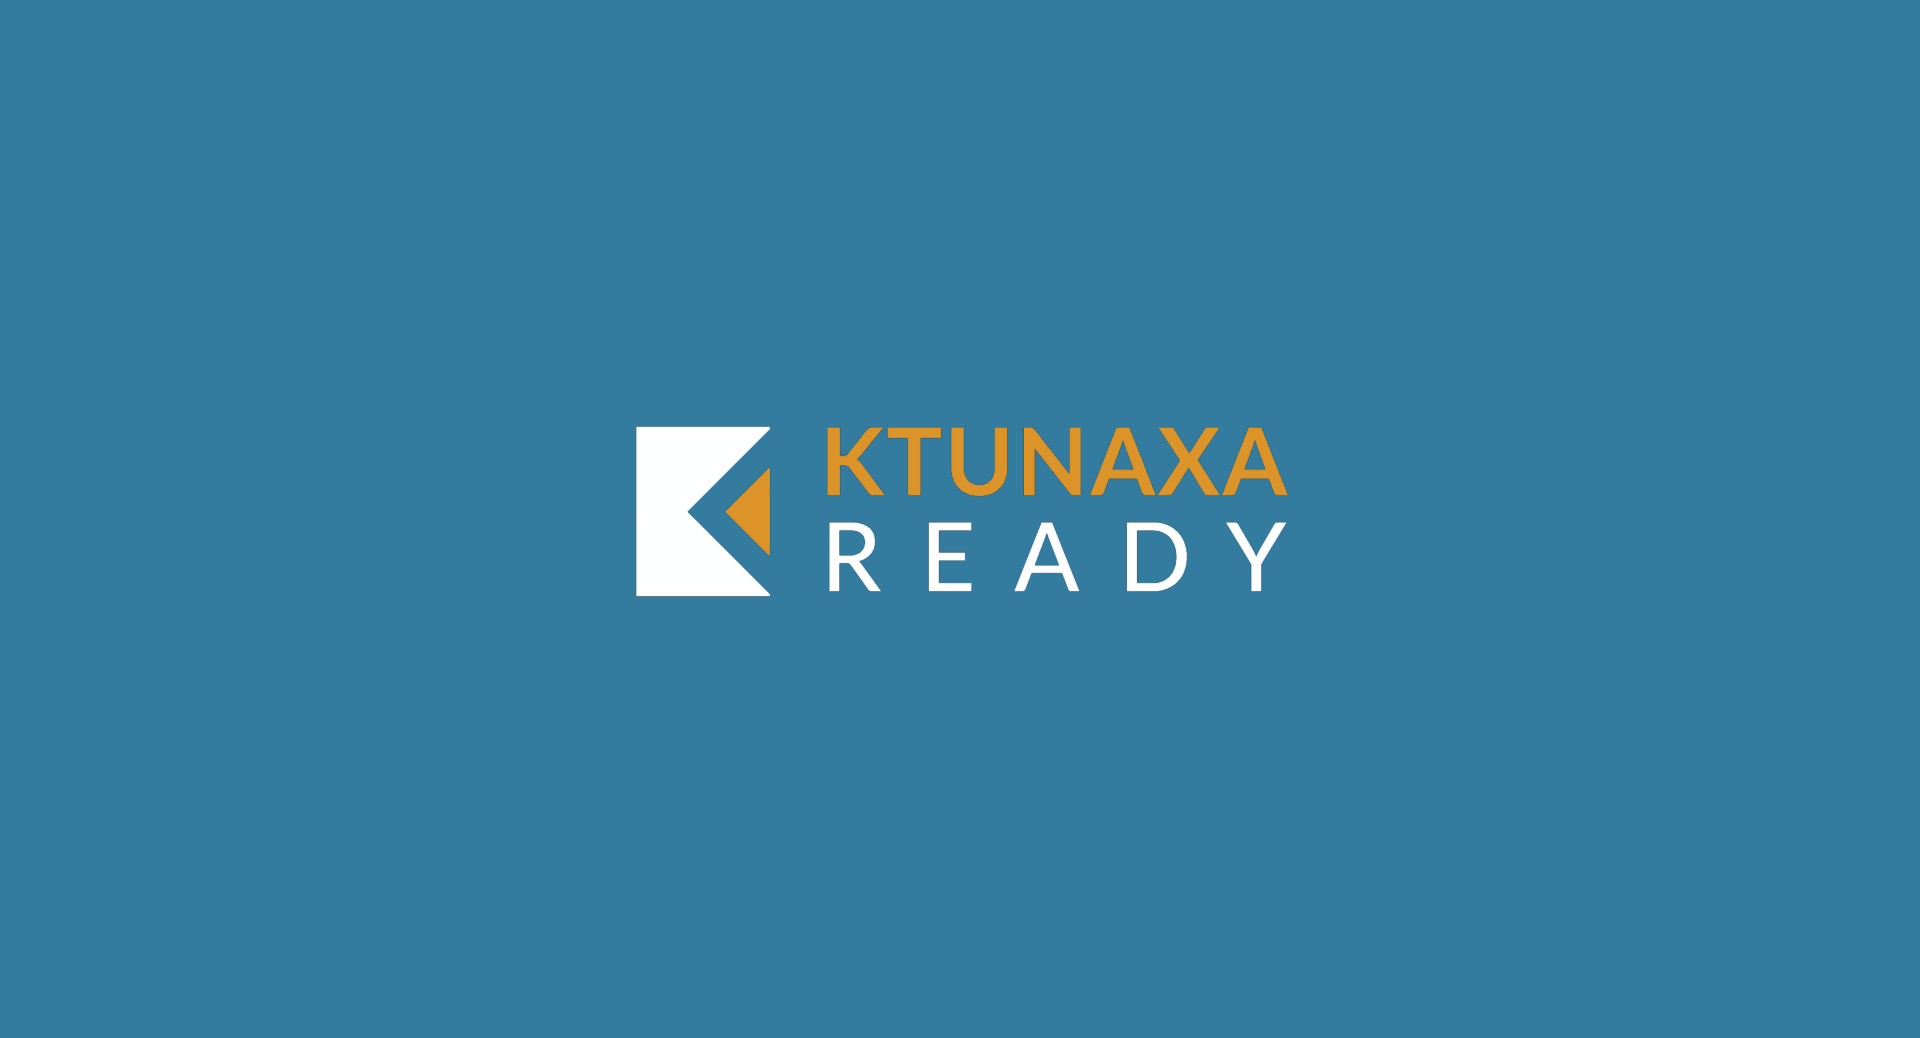 Ktunaxa Ready website by birr agency